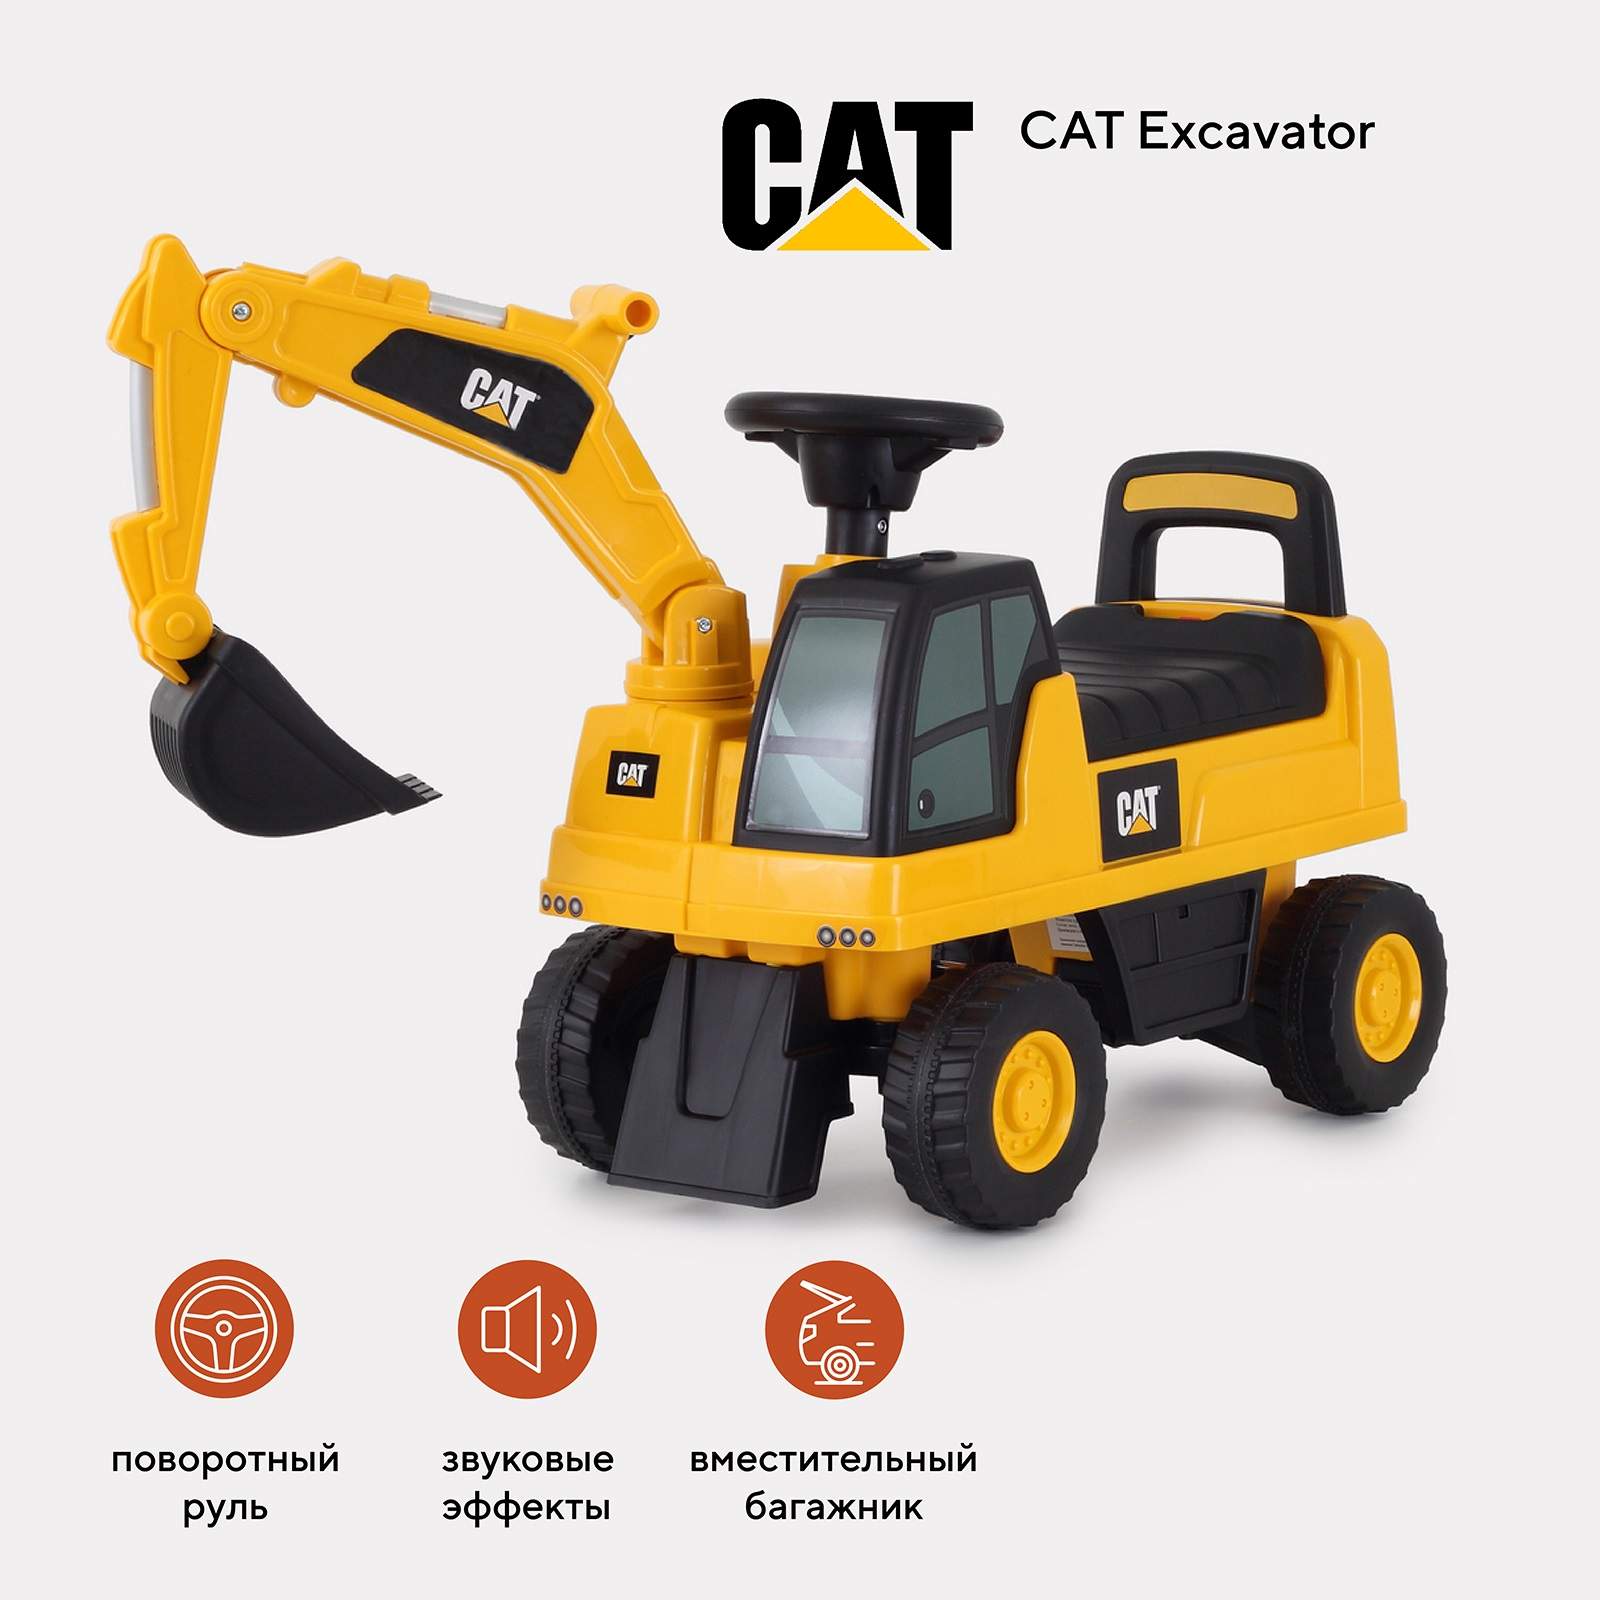 Машинка-каталка Cat Excavator Yellow-желтый 10pcs construction ignition key s450 khr20070 150979a1 fit case linkbelt jcb excavator